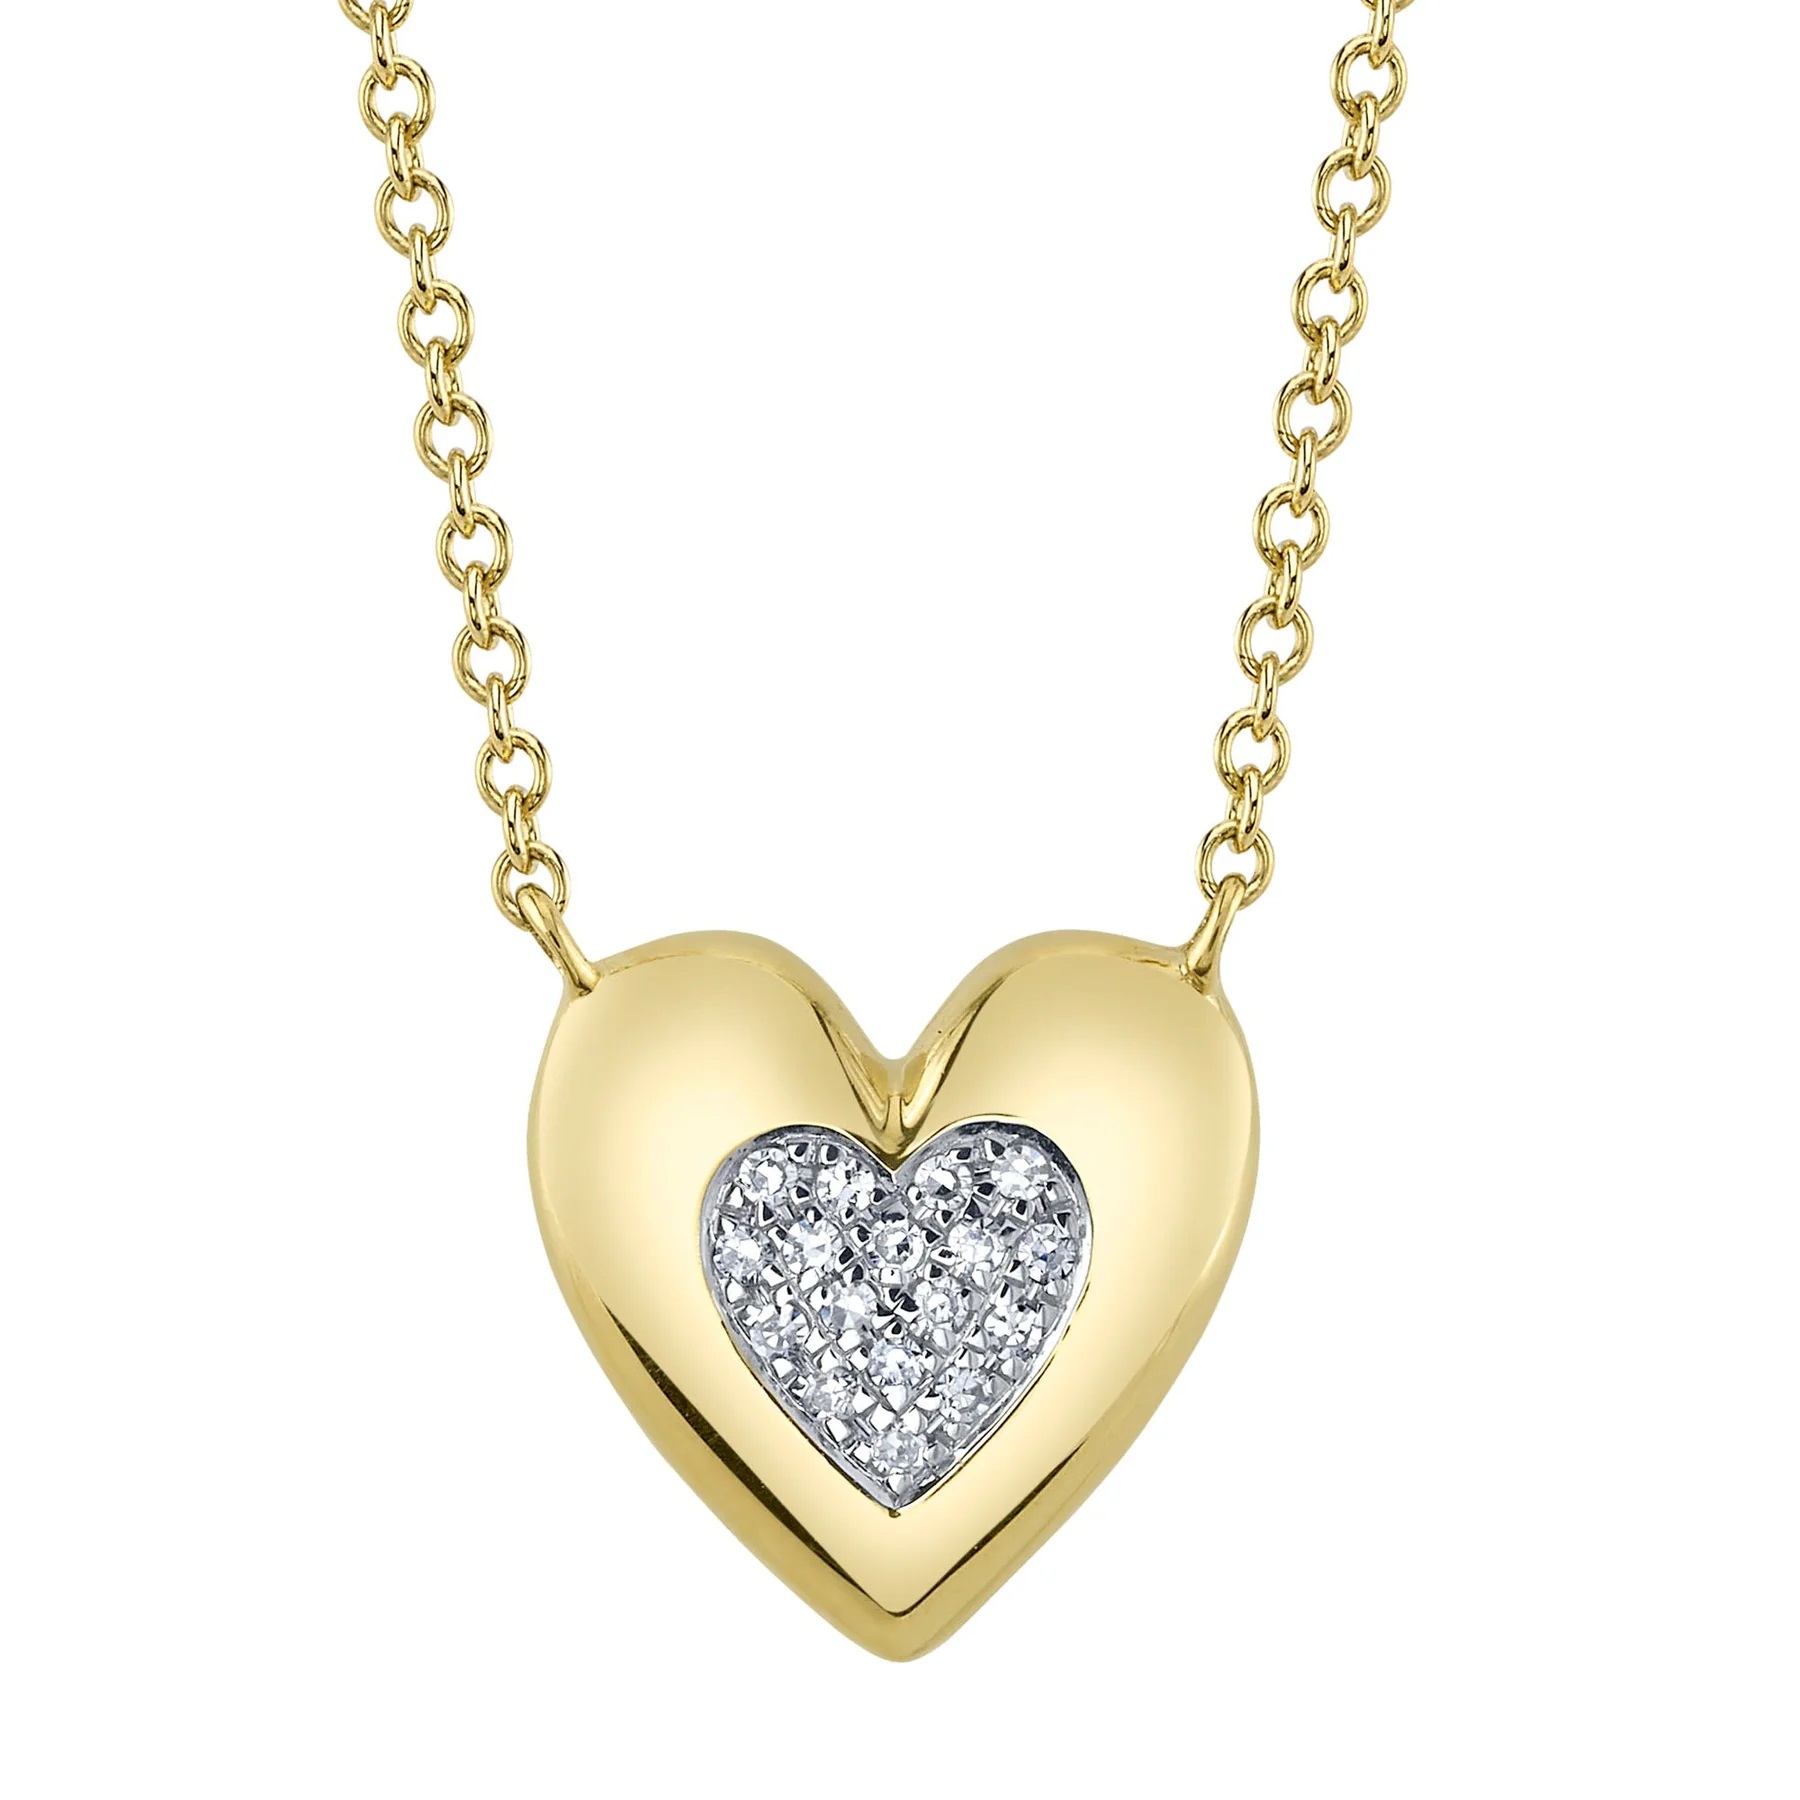 Korman Signature 14kt Yellow Gold Diamond Heart In Heart Pendant Necklace 18